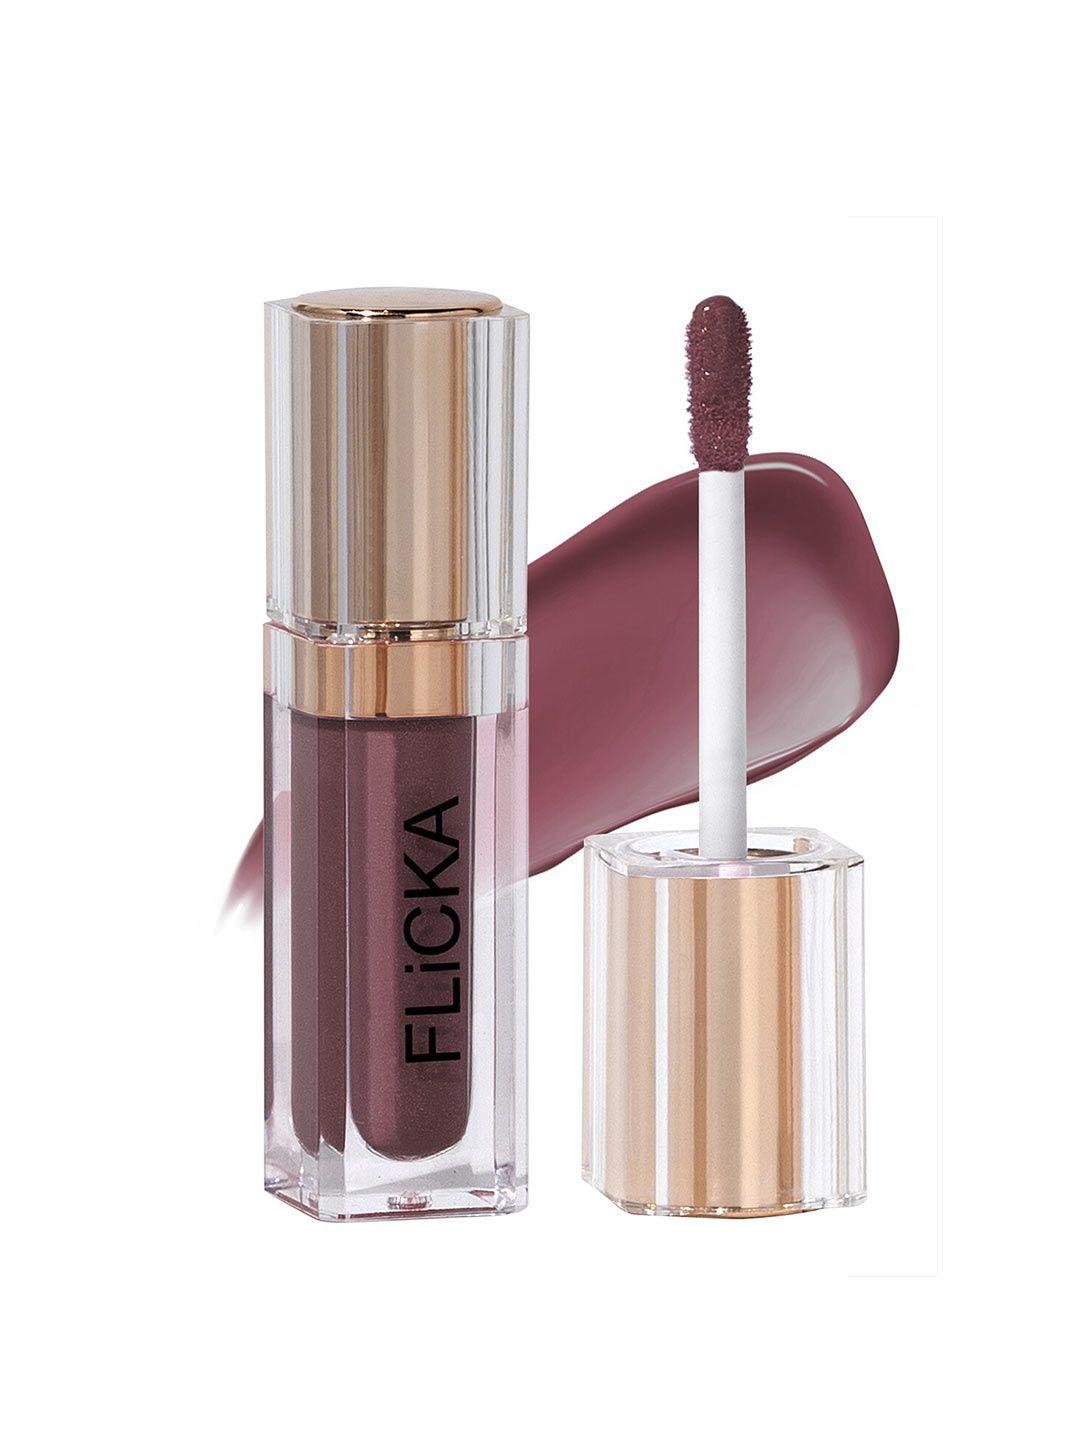 flicka shimmery affair lightweight non-sticky long-lasting lip gloss 5ml - champaigne 09